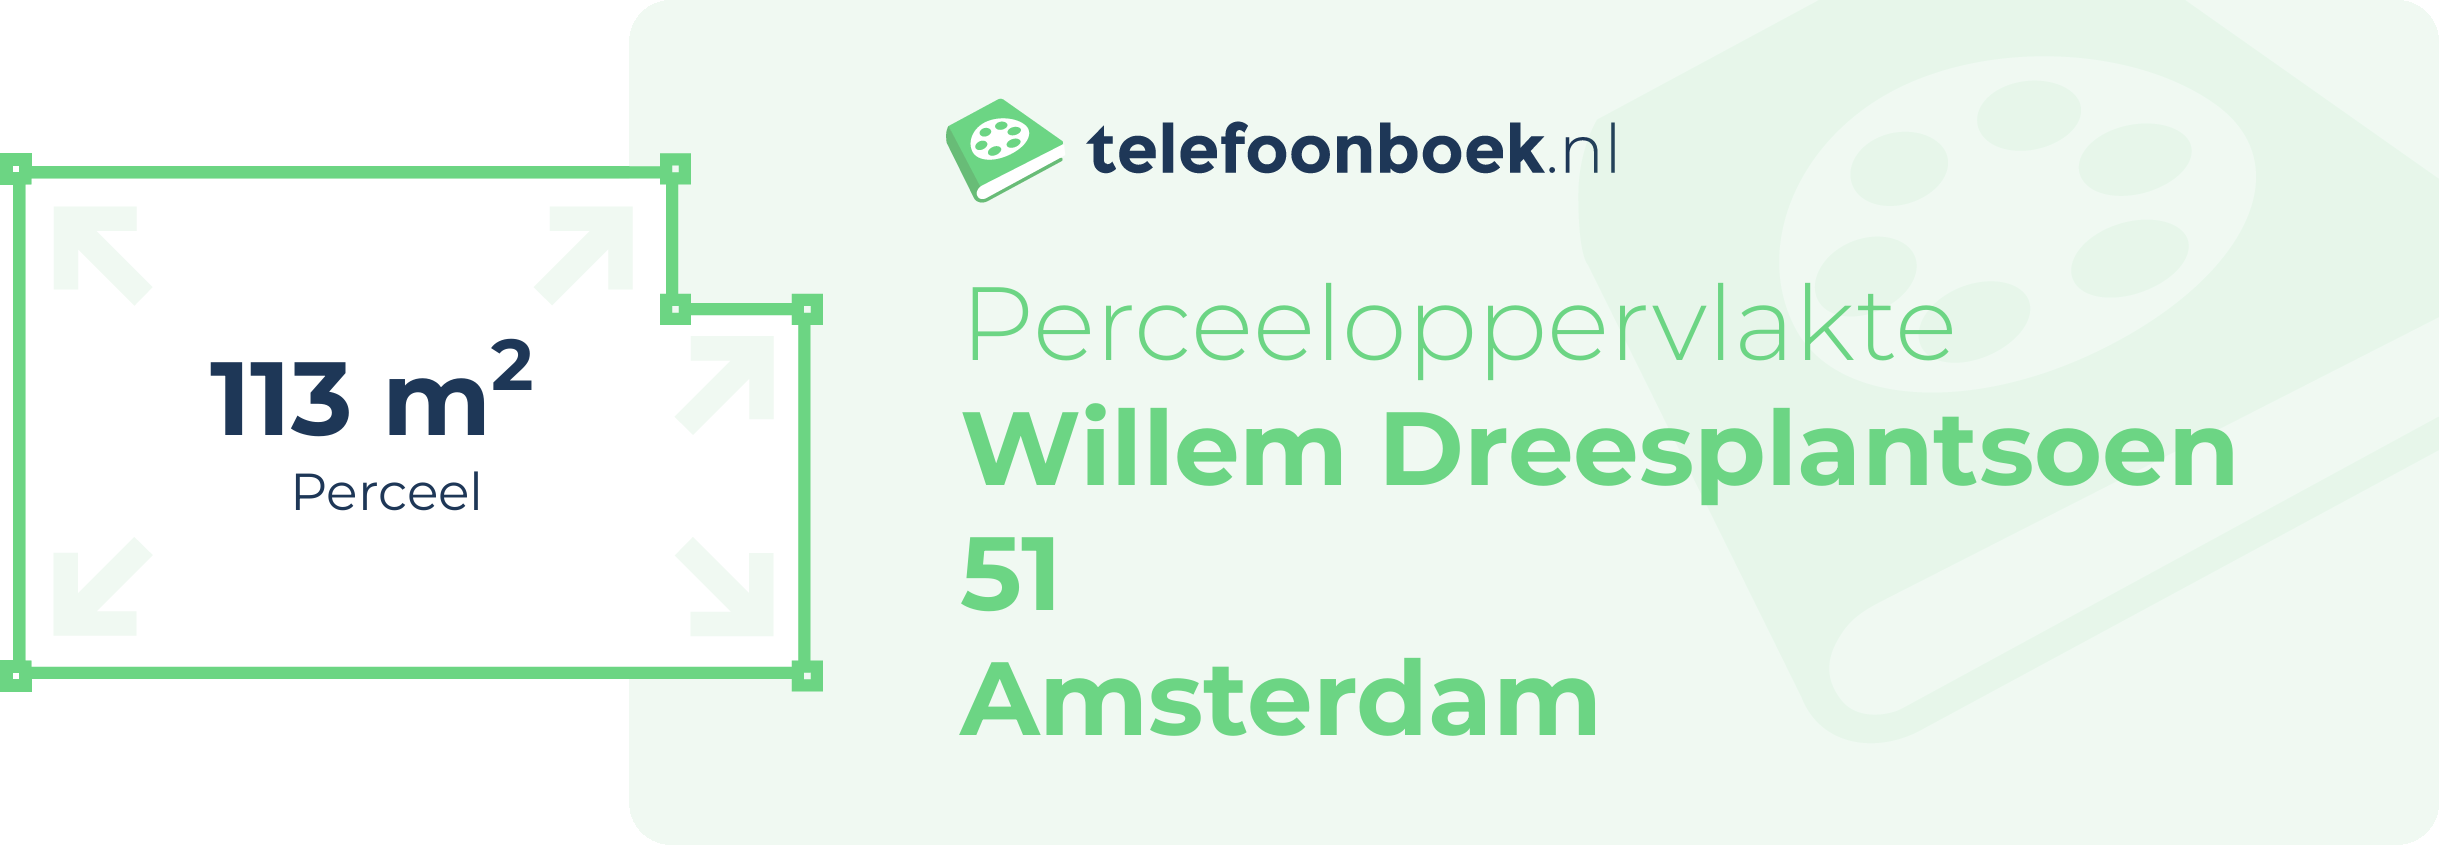 Perceeloppervlakte Willem Dreesplantsoen 51 Amsterdam